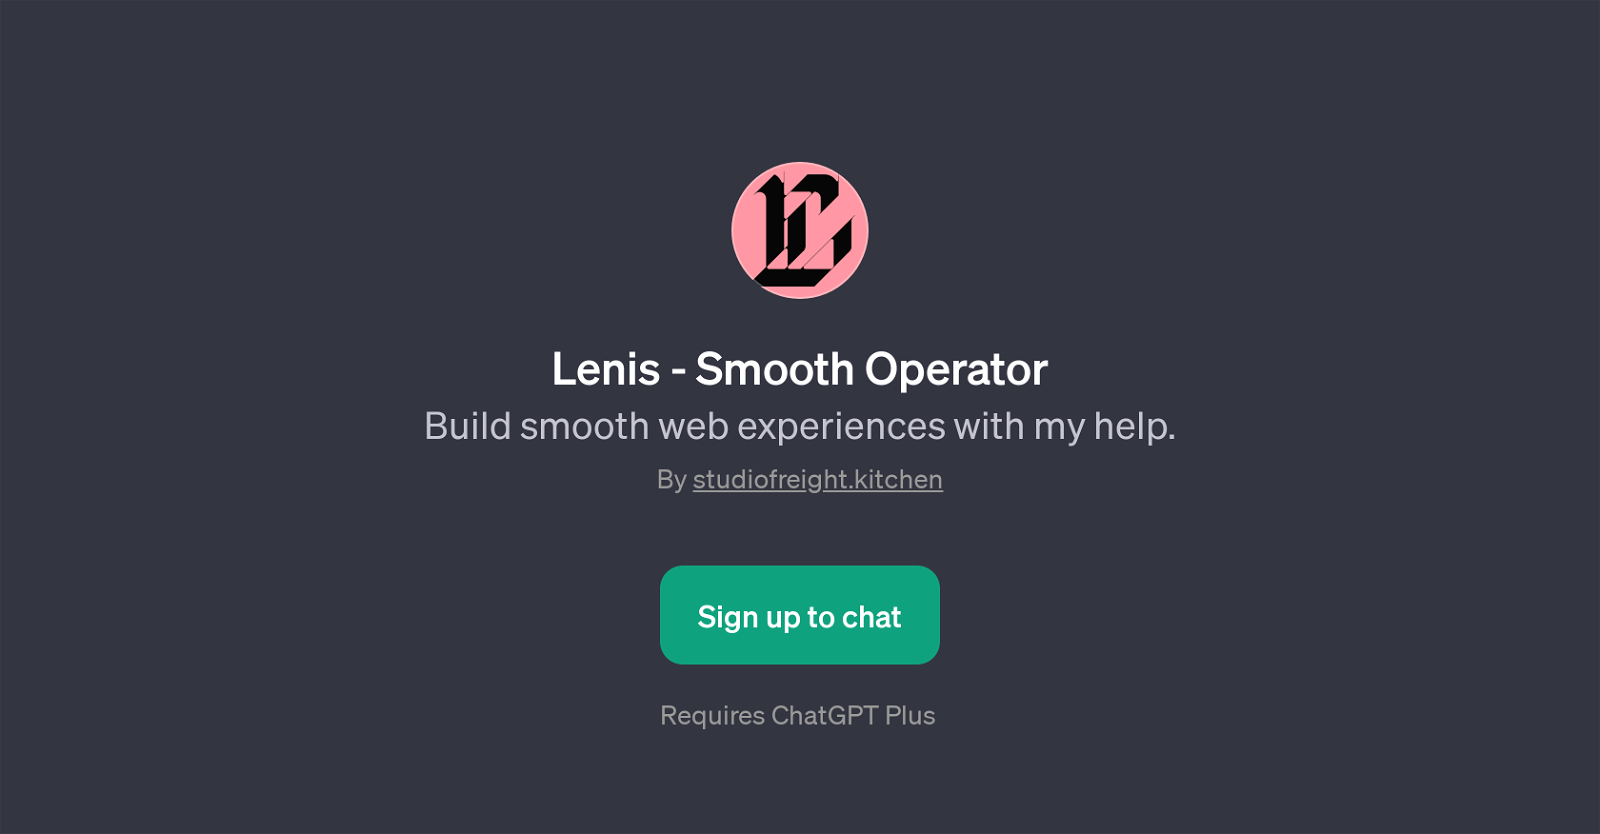 Lenis - Smooth Operator website